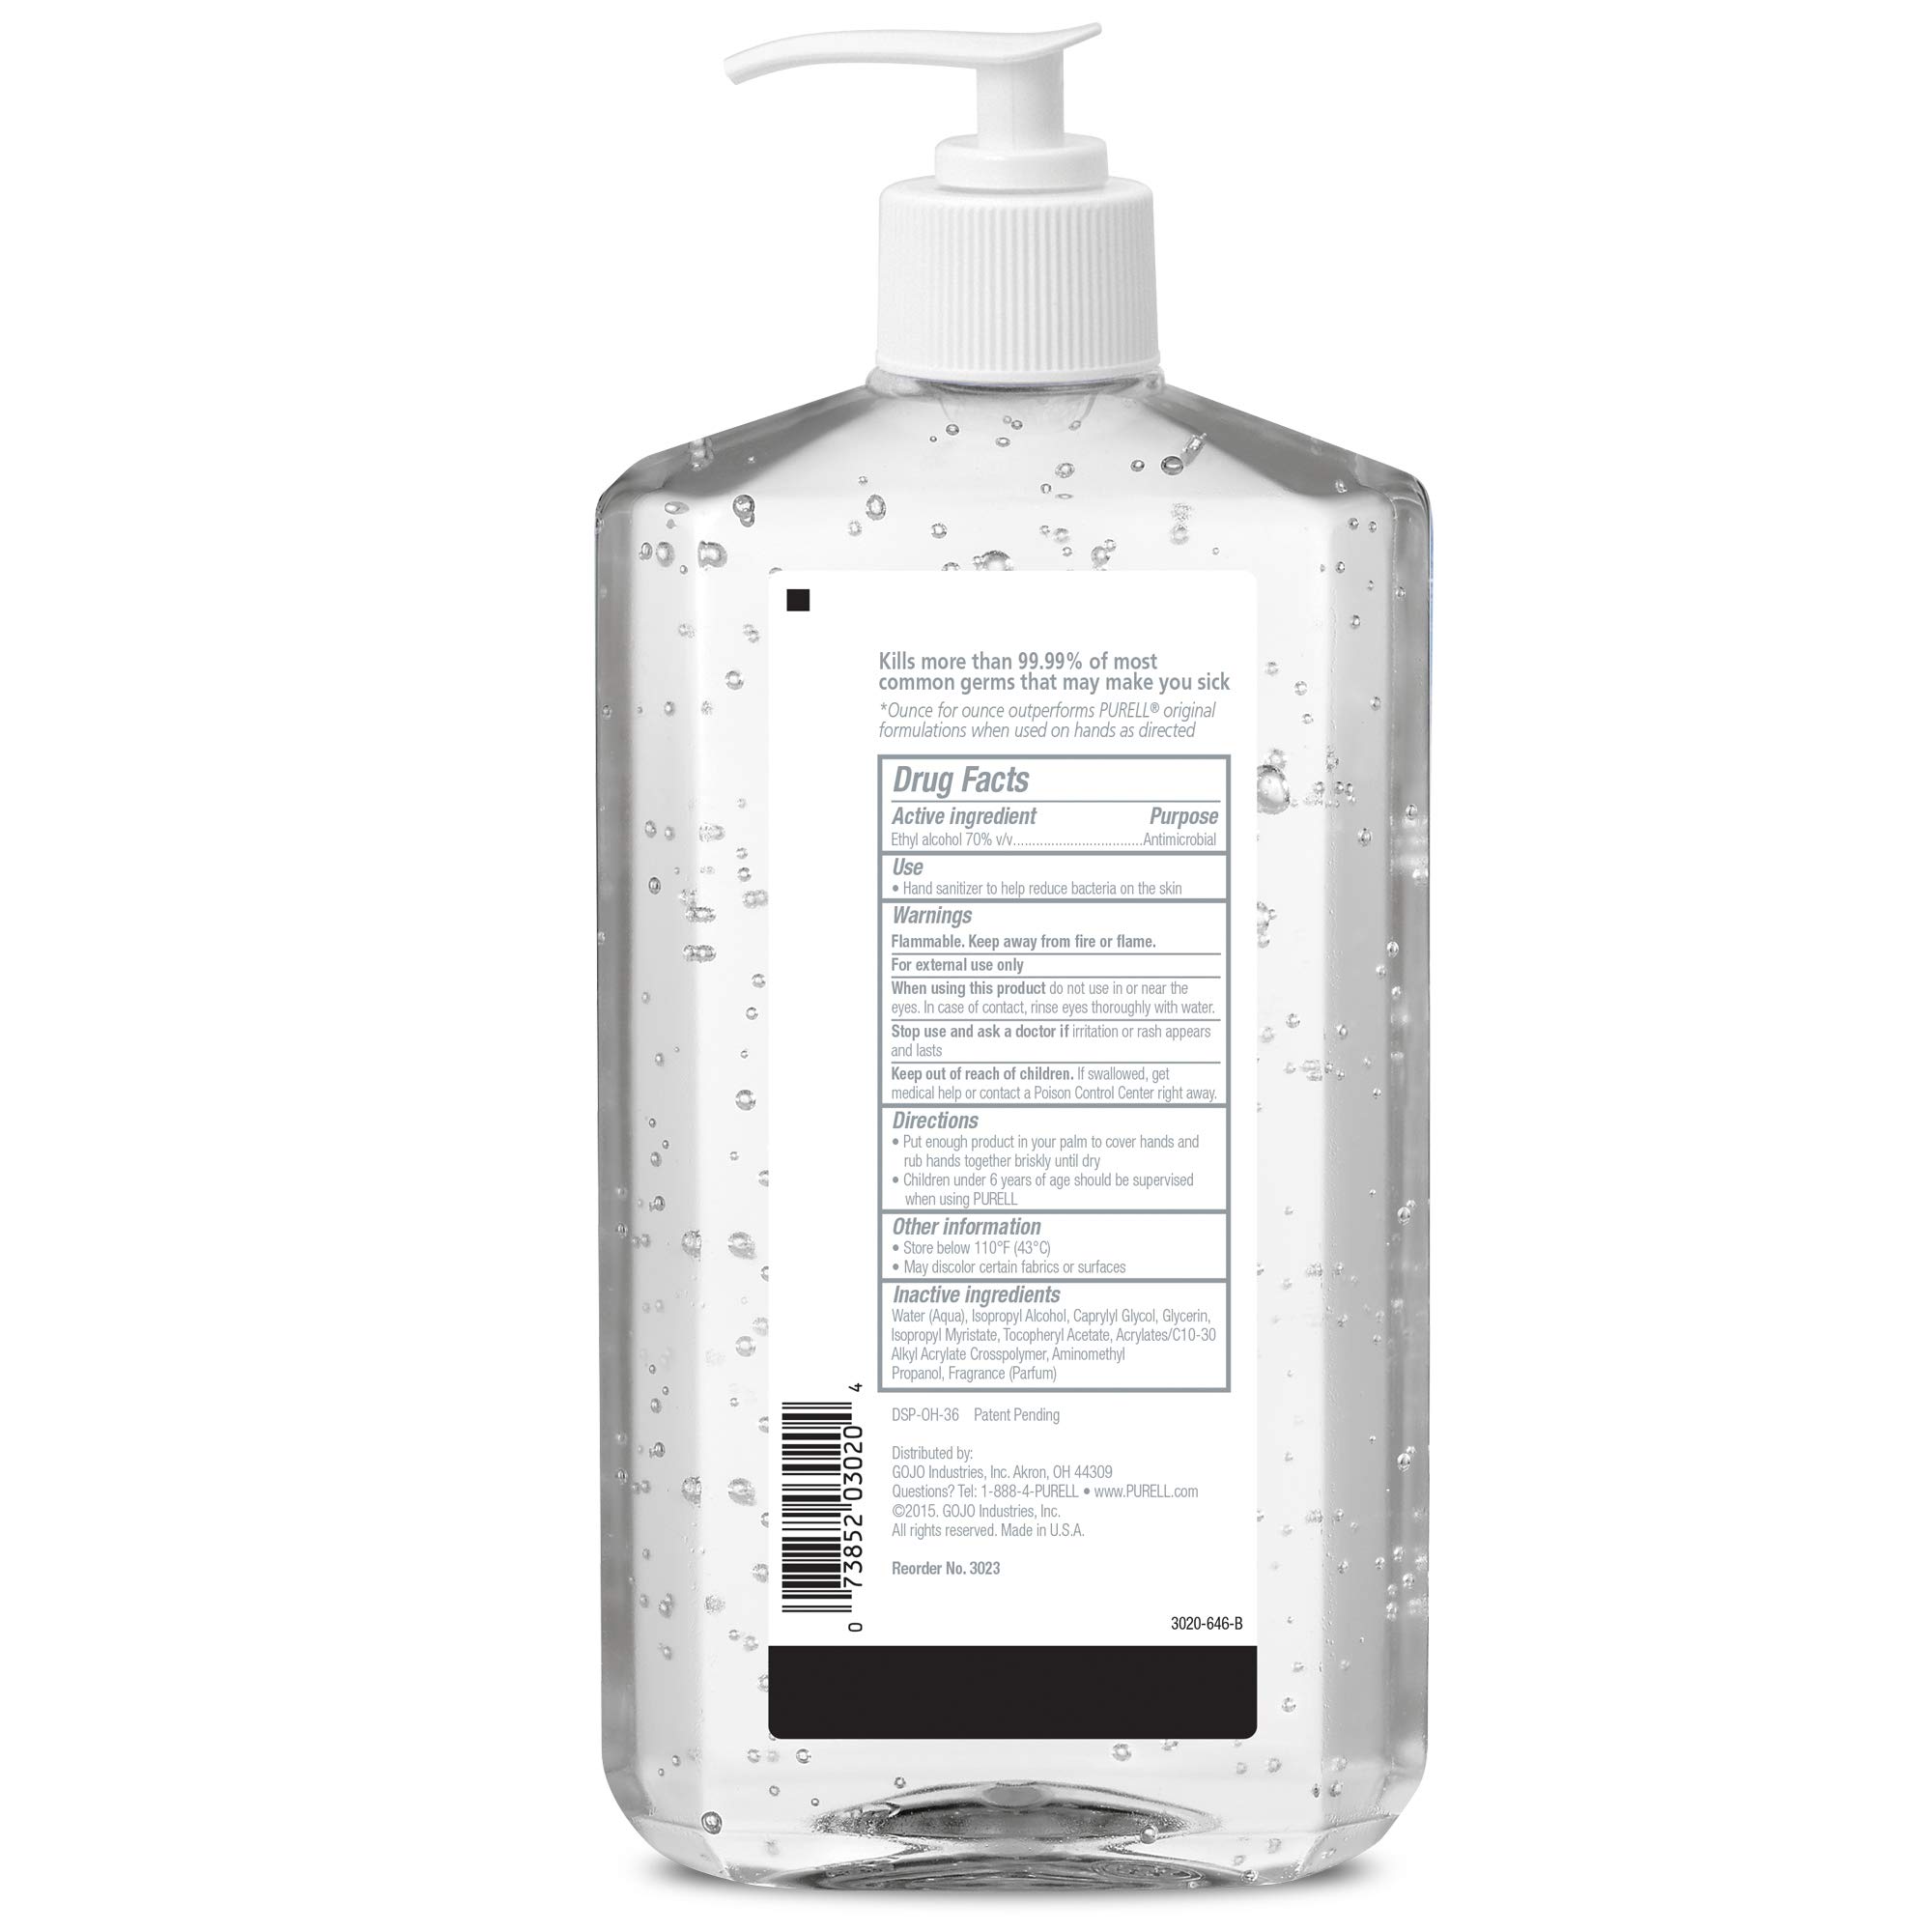 Purell Advanced Hand Sanitizer Refreshing Gel, Clean Scent, 20 fl oz Pump Bottle (Pack of 12)- 3023-12